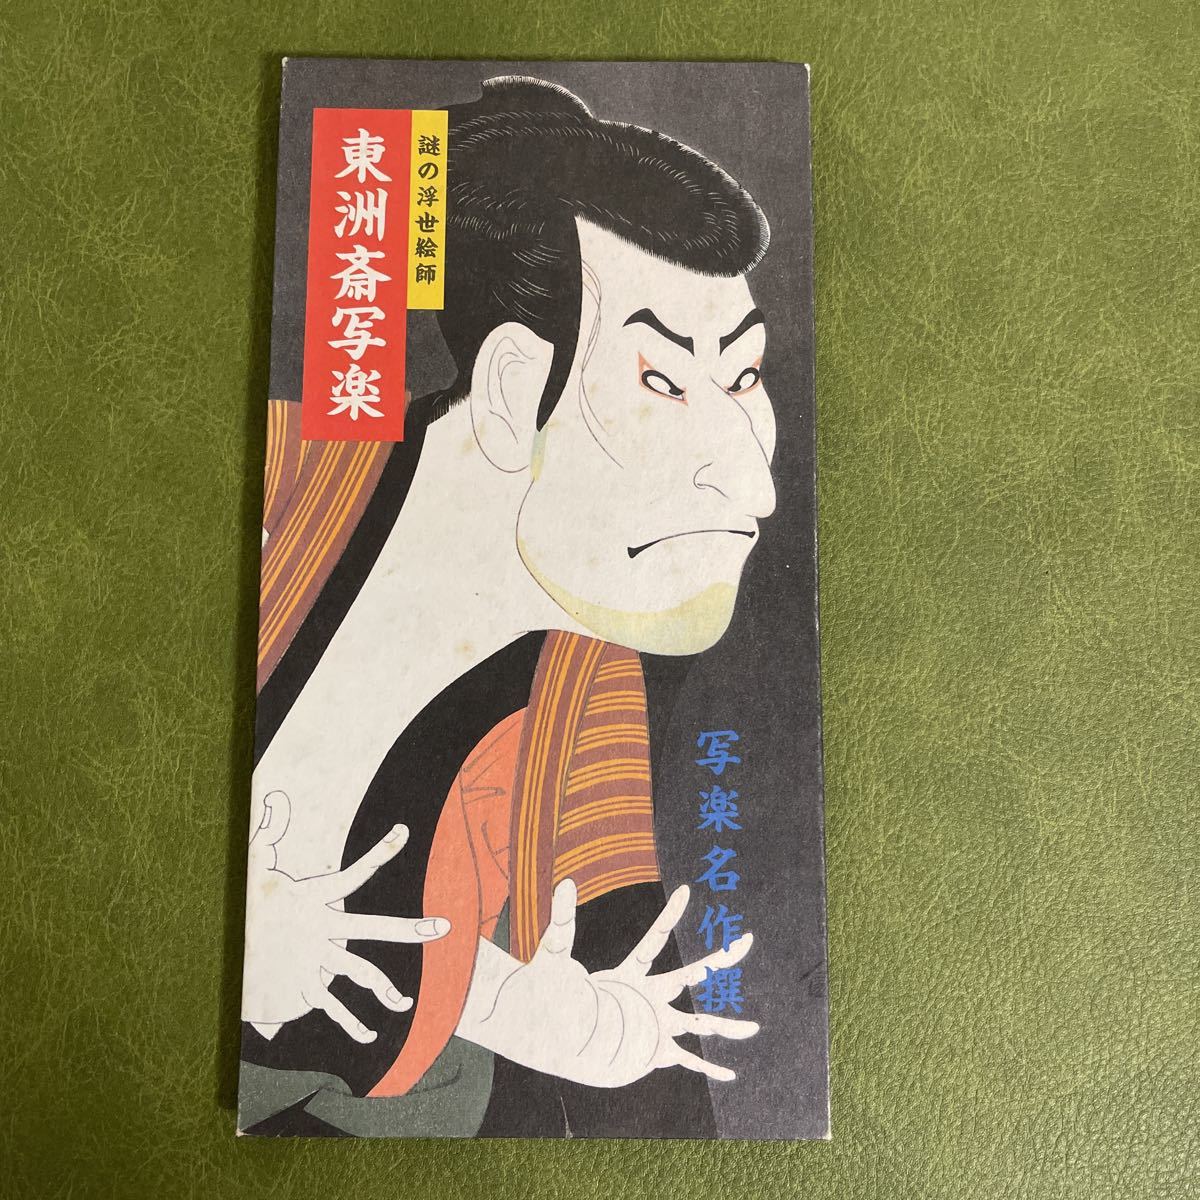 Der mysteriöse Ukiyo-e-Künstler Toshusai Sharaku Ukiyo-e, Malerei, Kunstbuch, Sammlung, Katalog